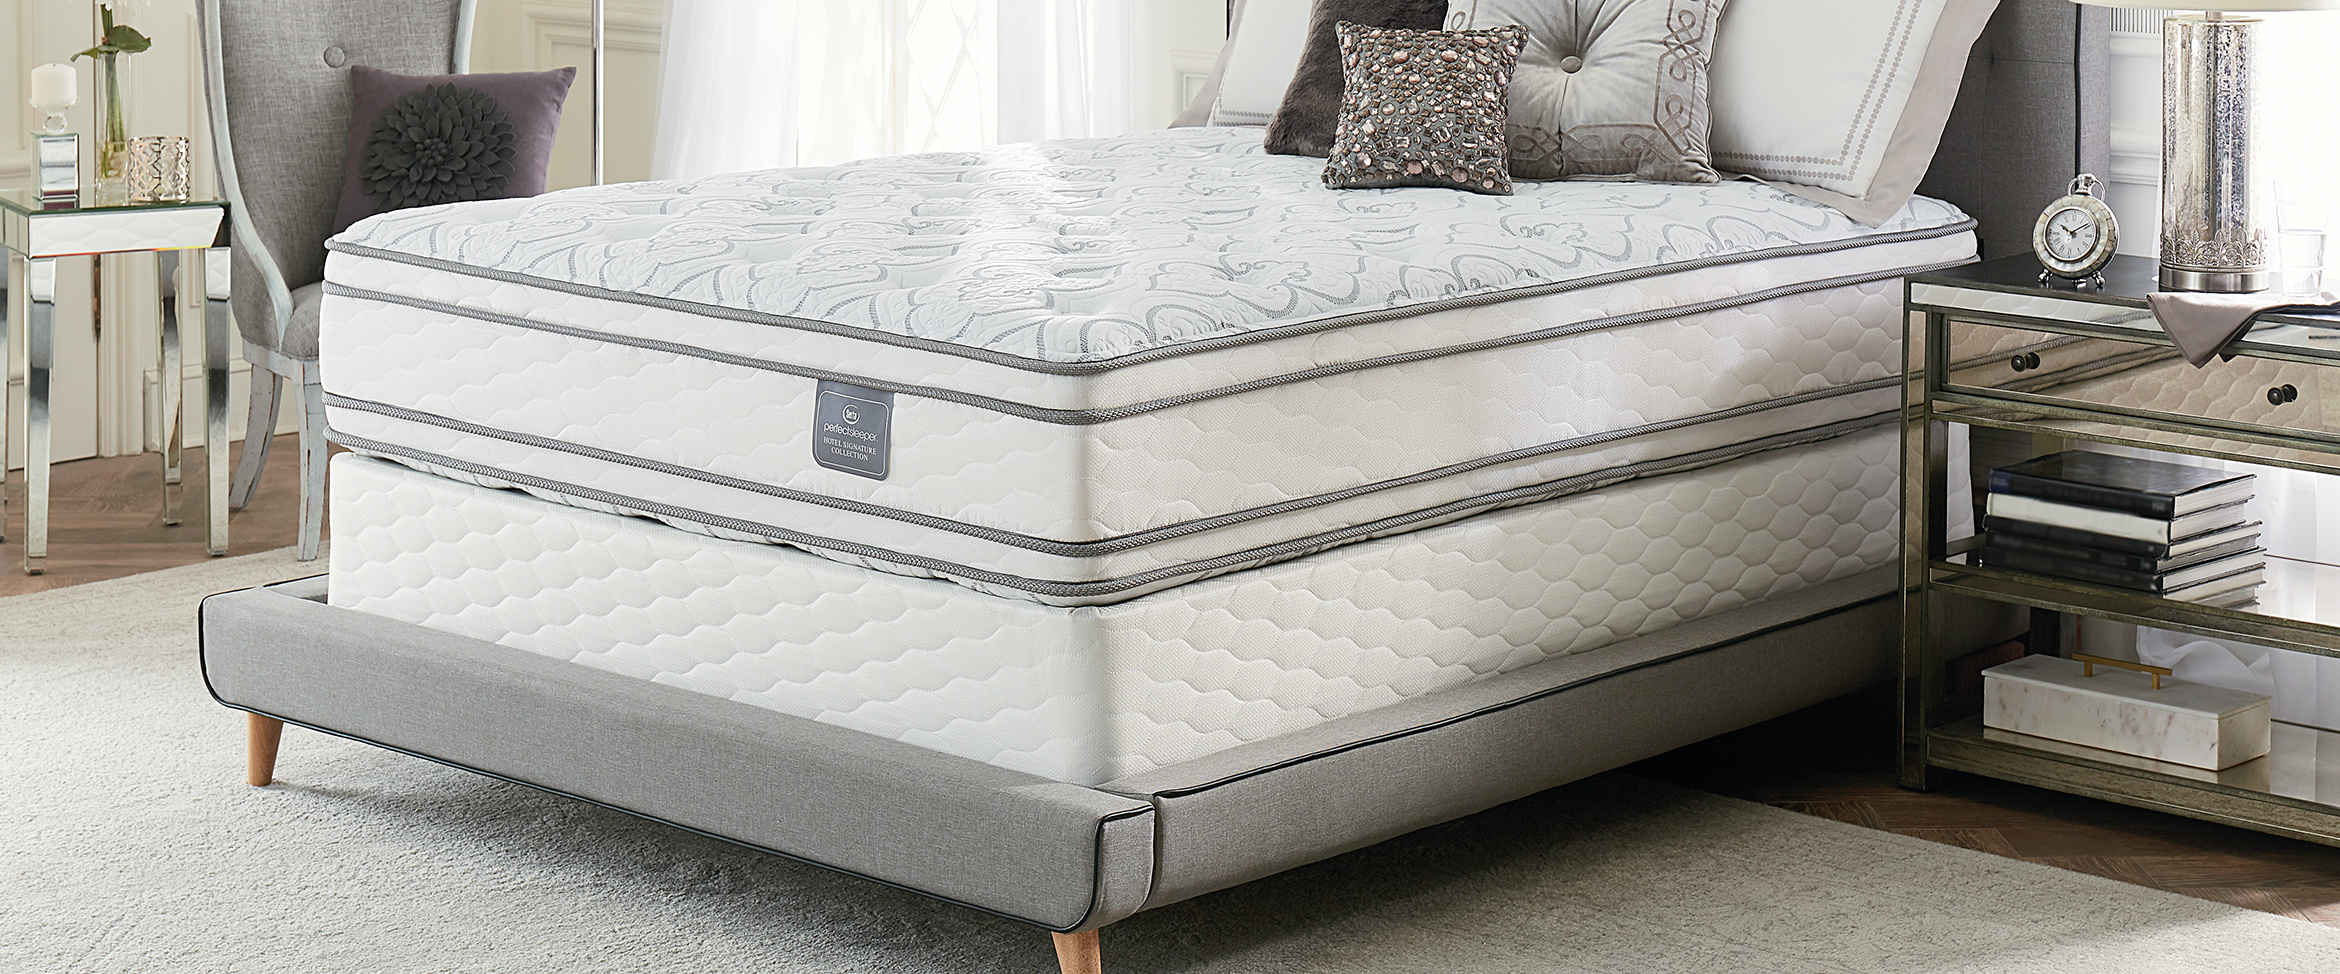 serta perfect sleeper regal double sided mattress reviews